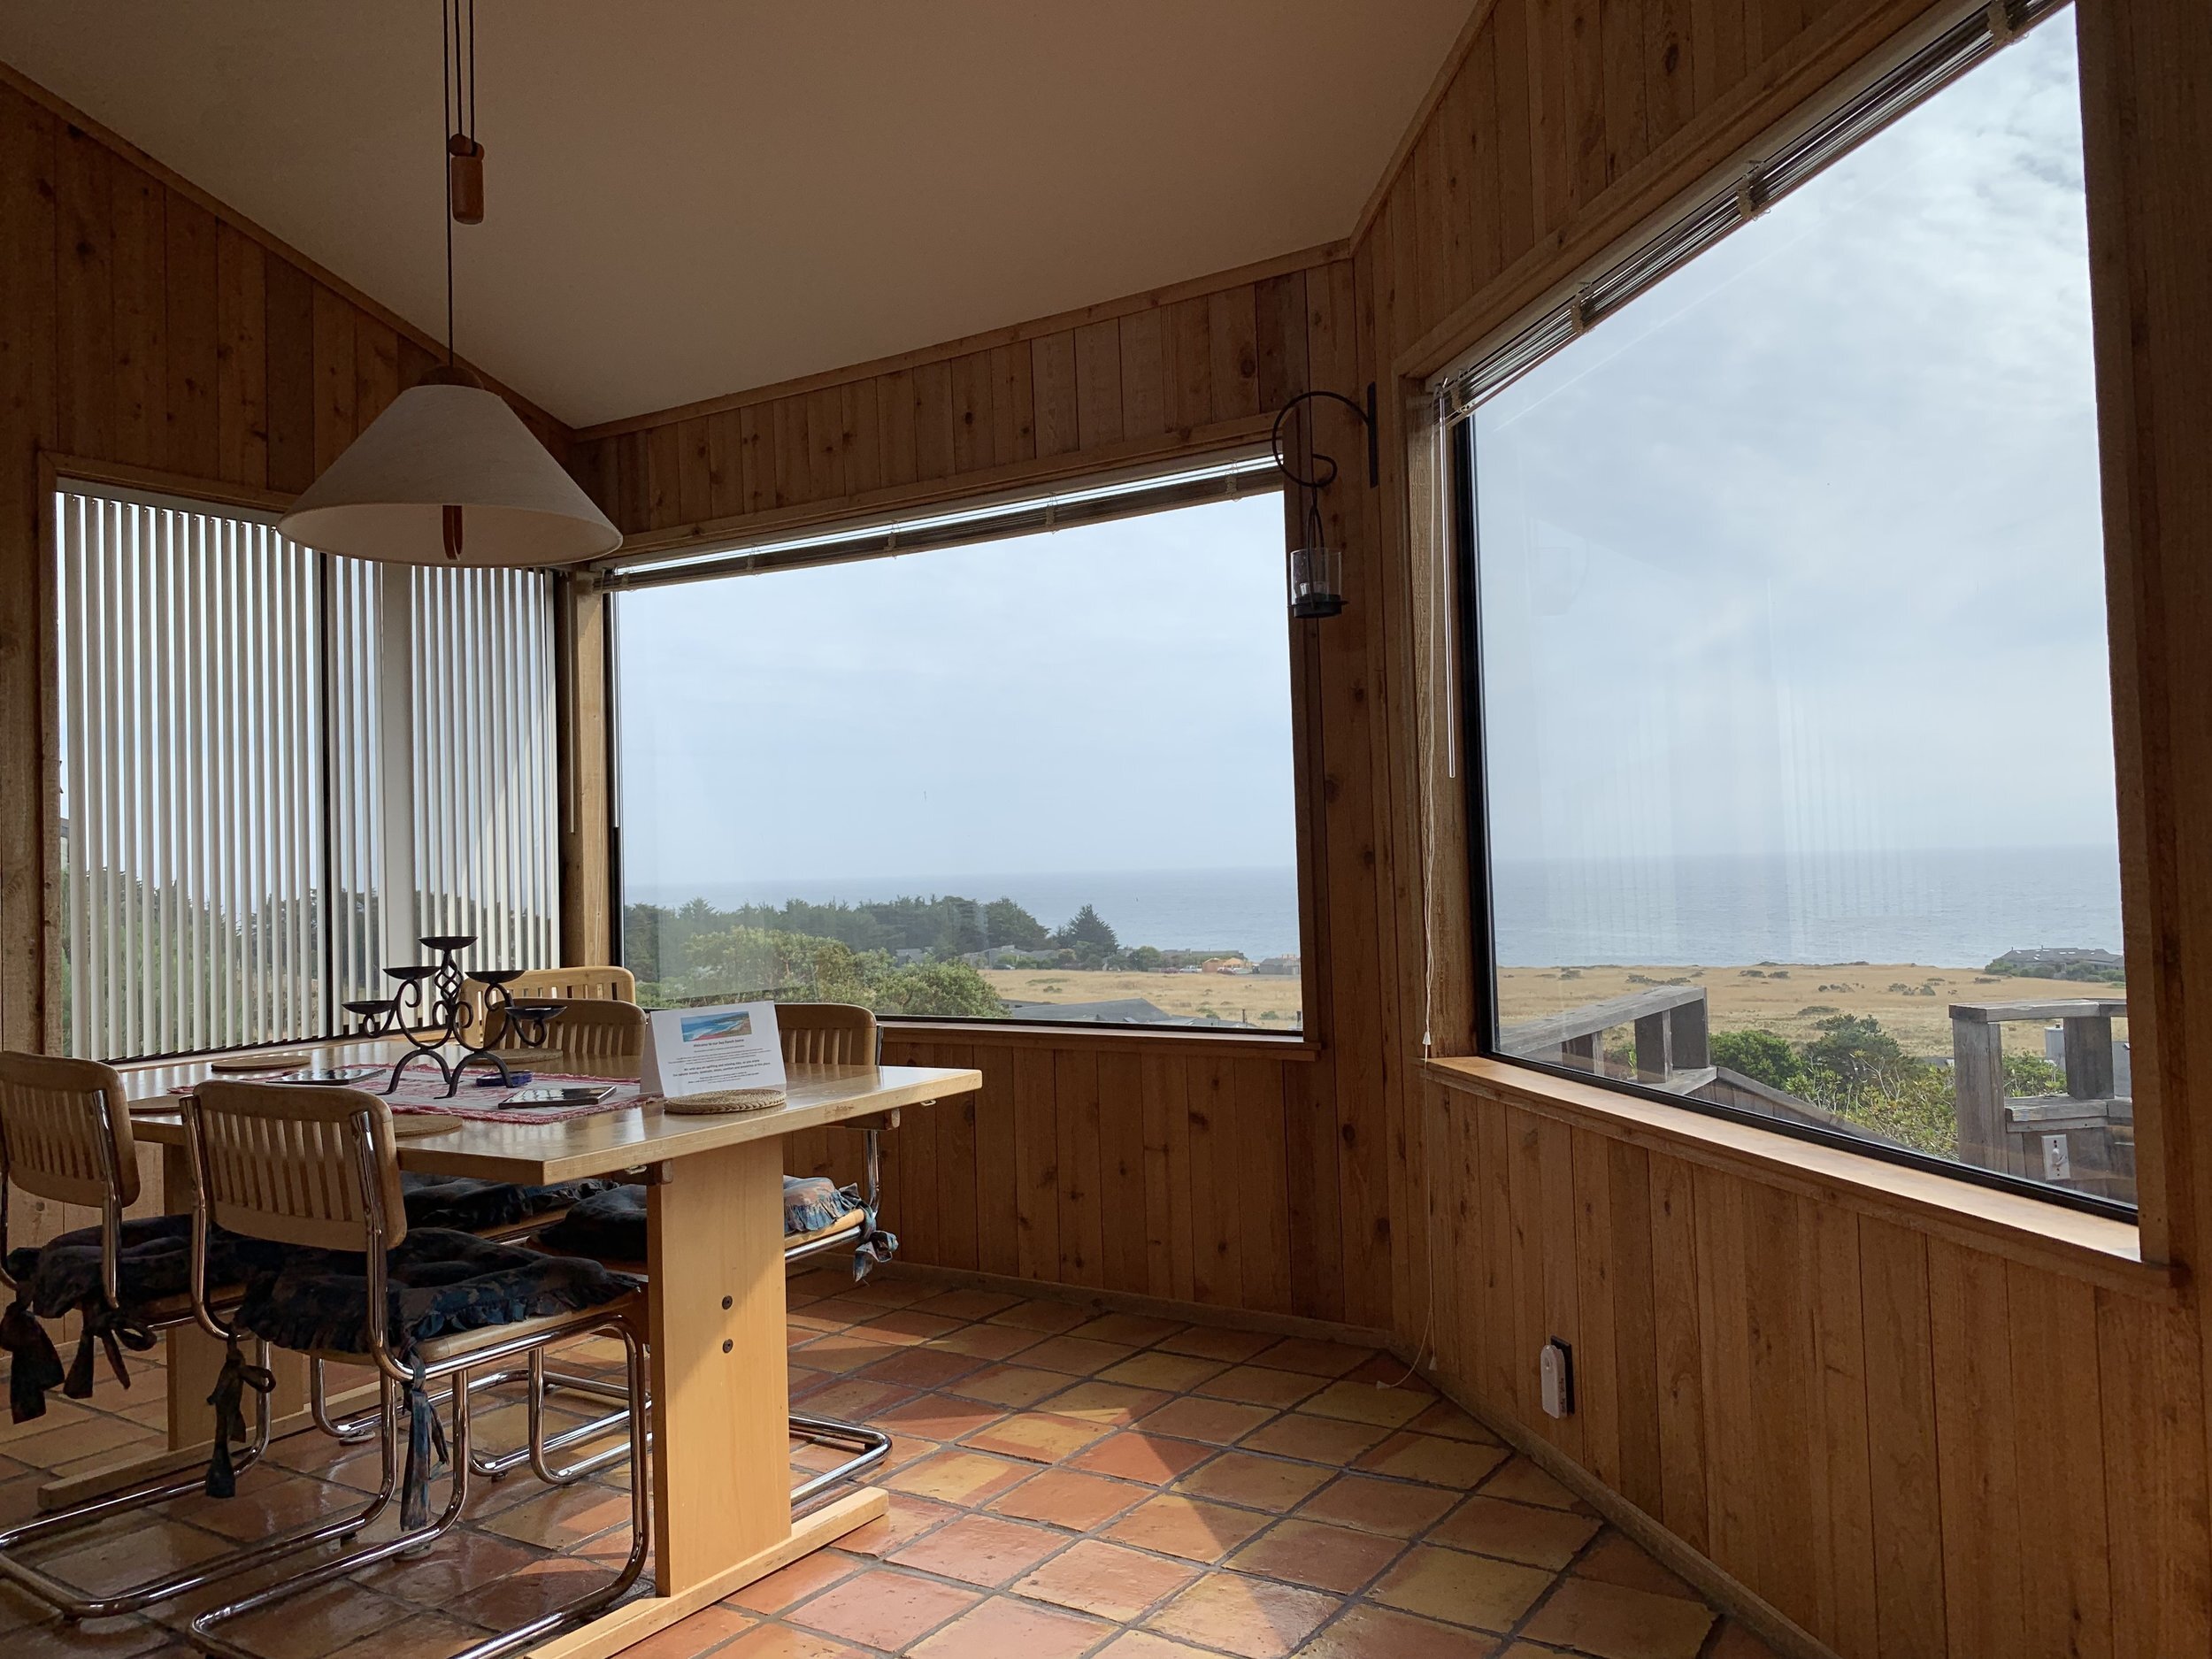 Bella Vista, over 60 linear feet of ocean view windows